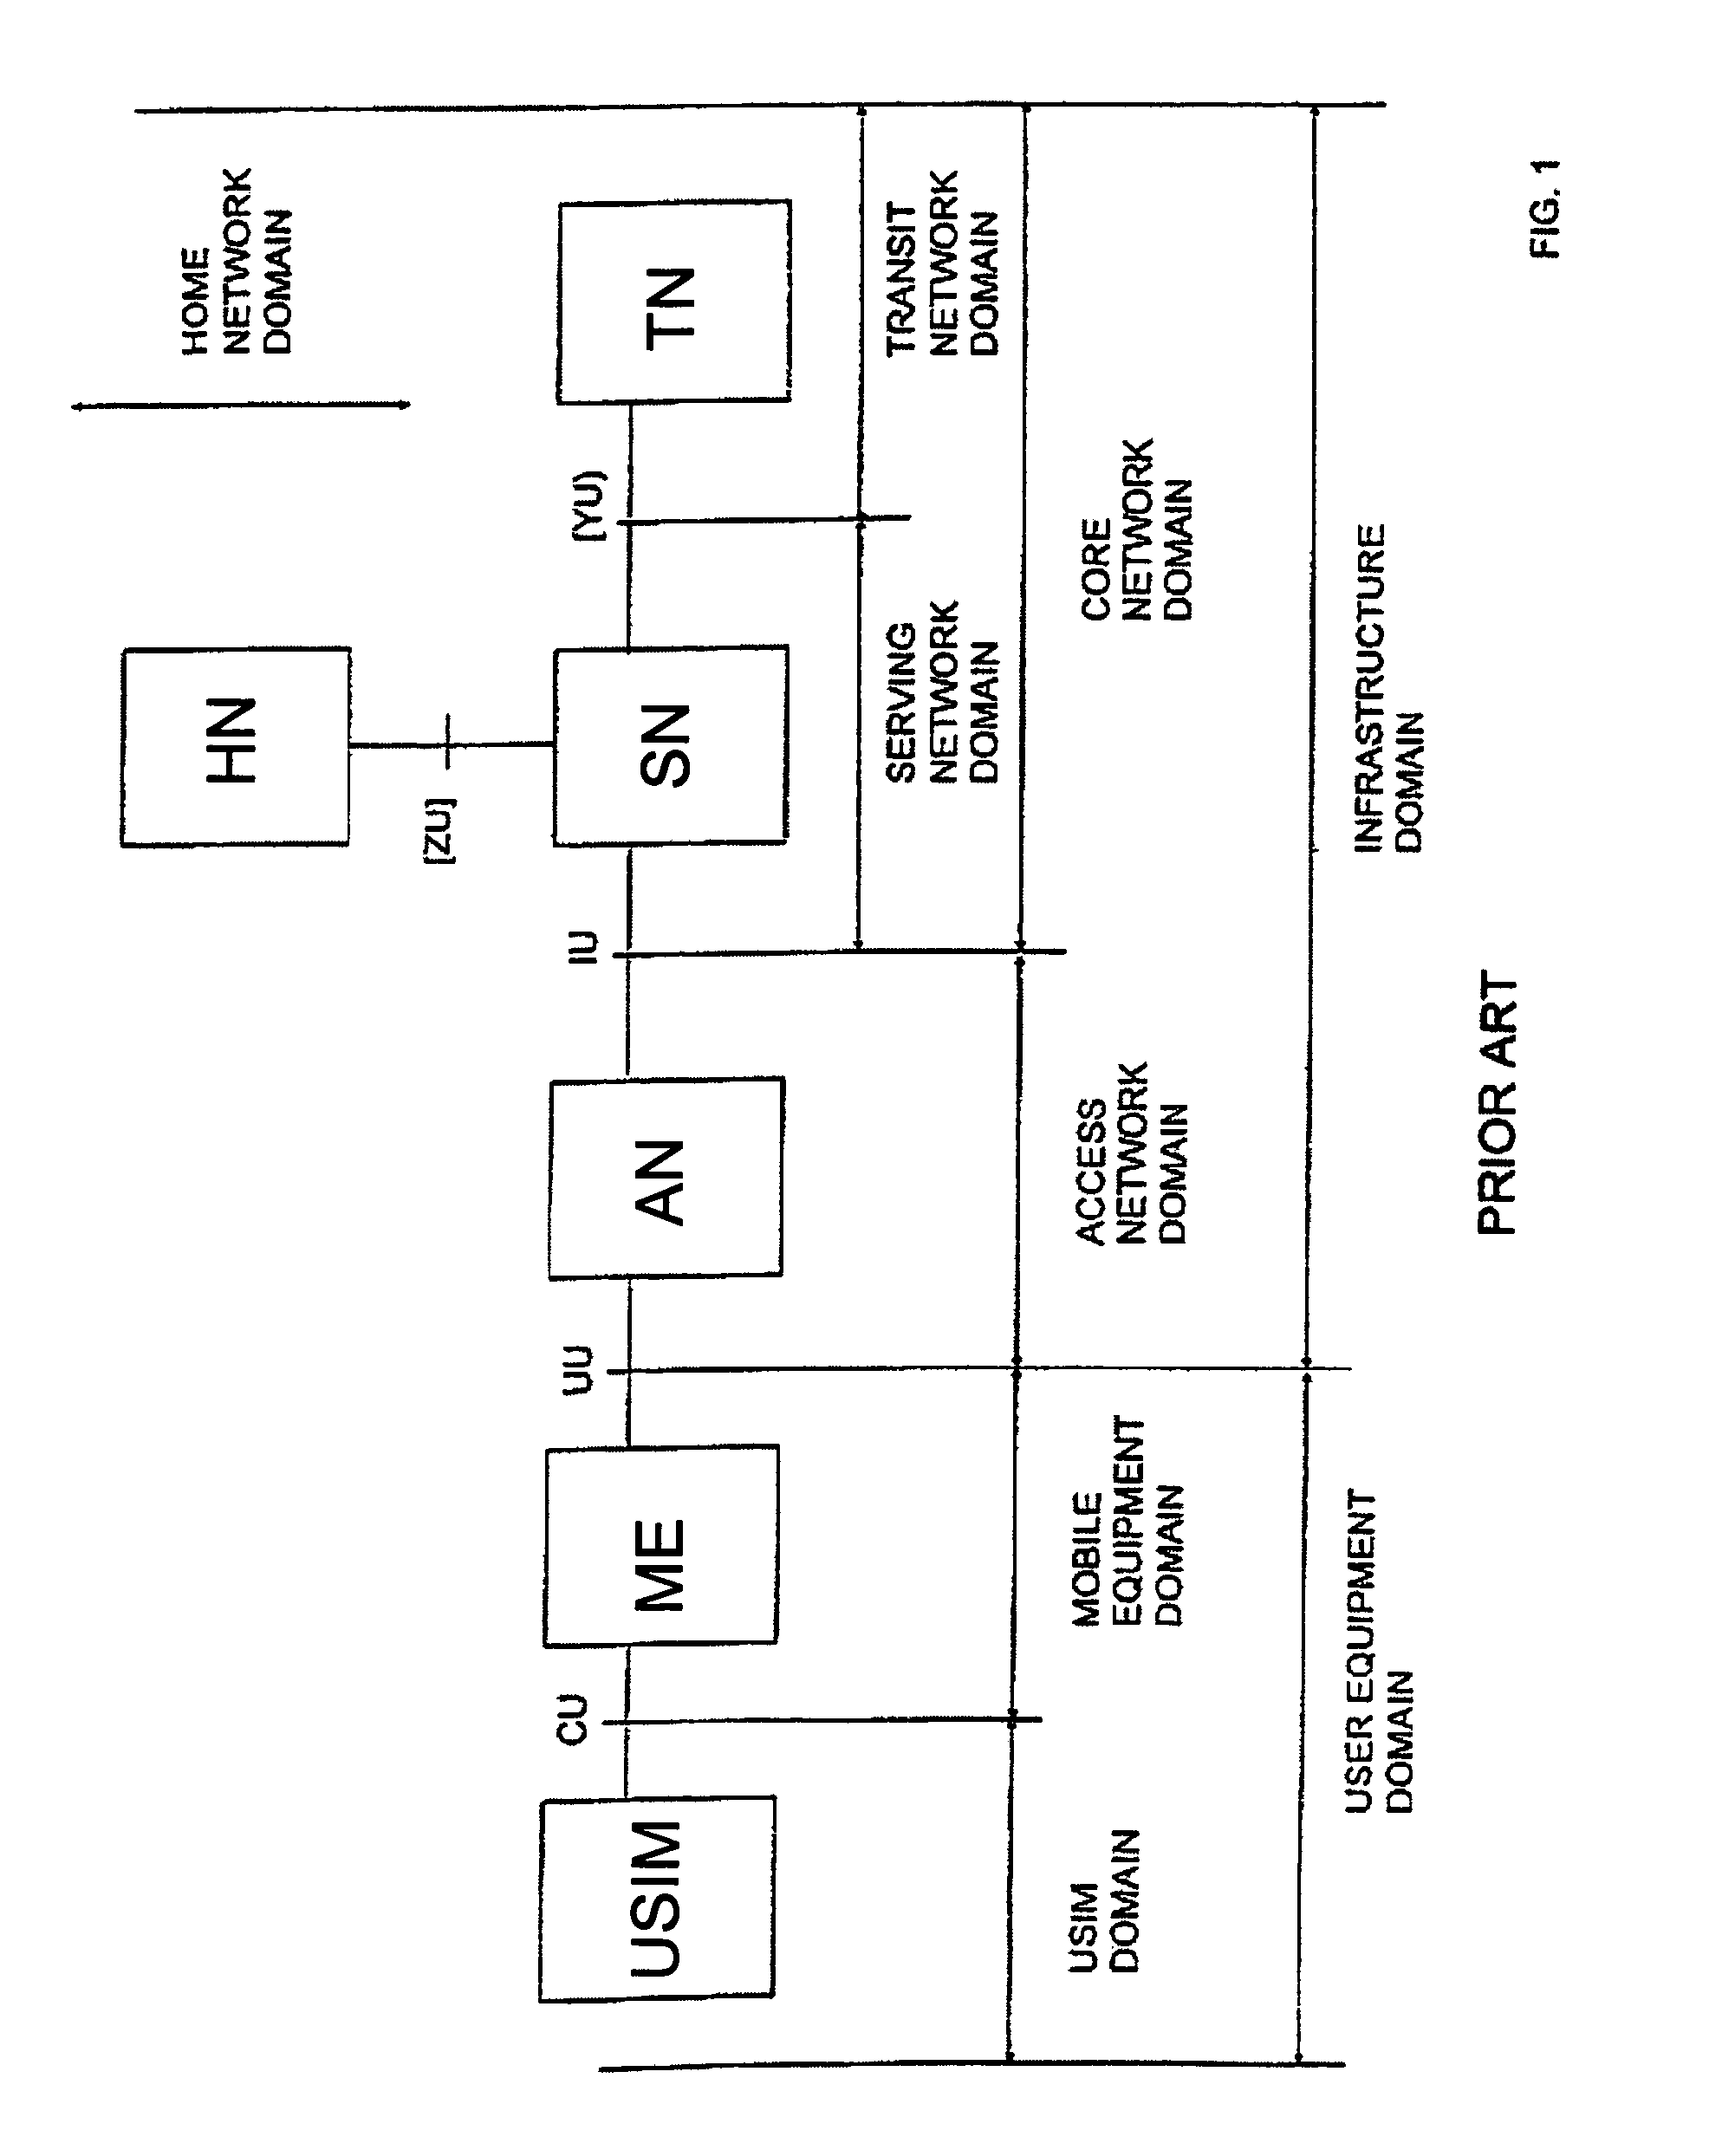 Method of processing CDMA signal components